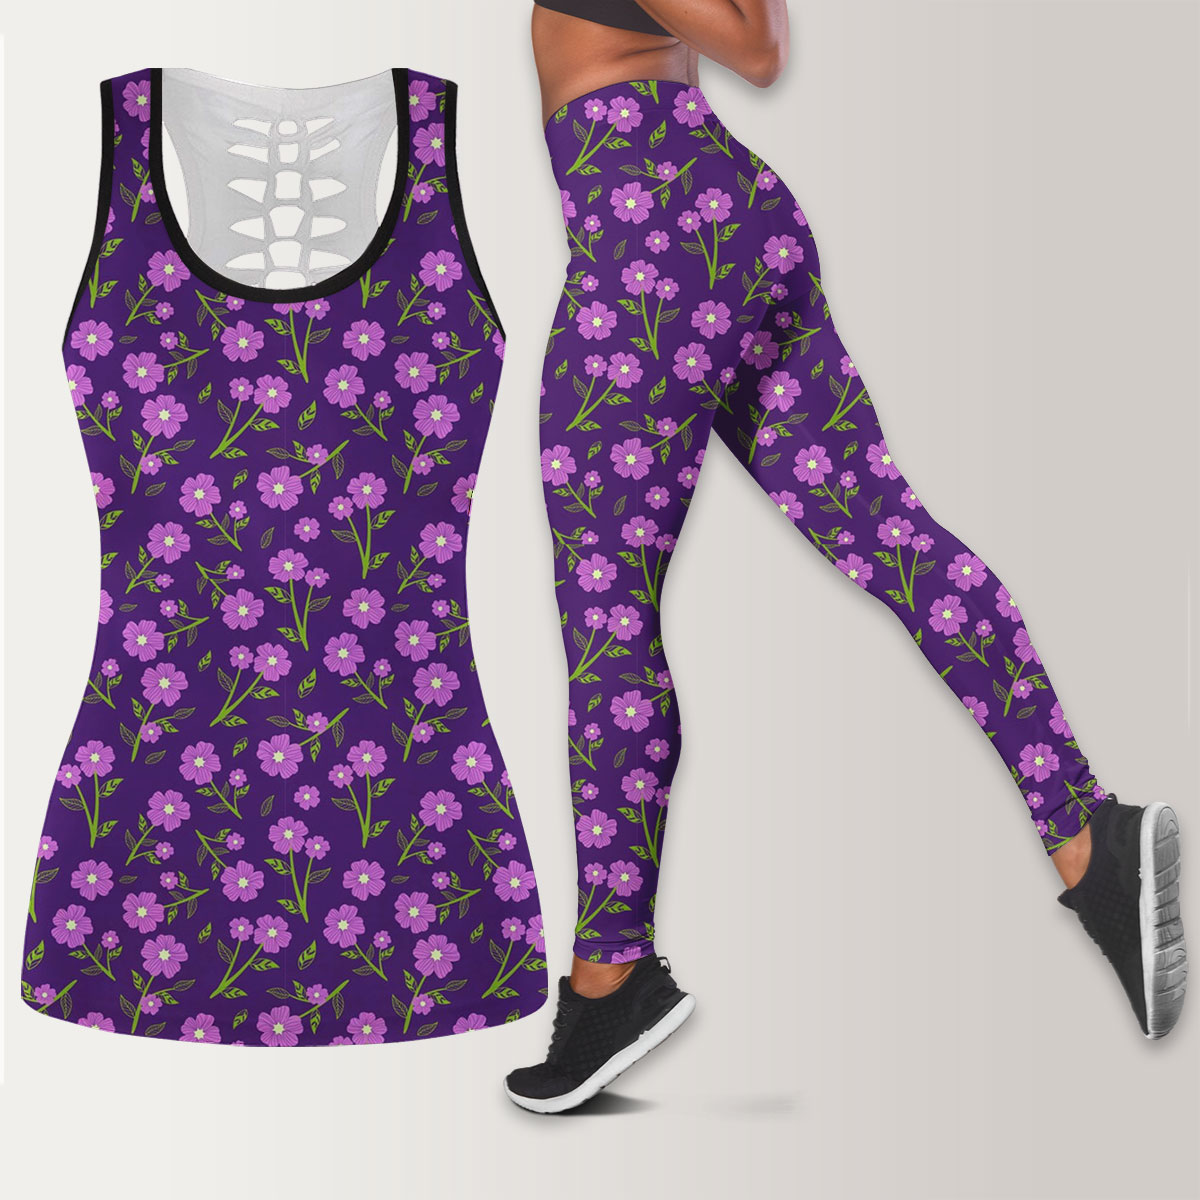 Purple Flower Vibe Seamless Pattern Legging Tank Top set